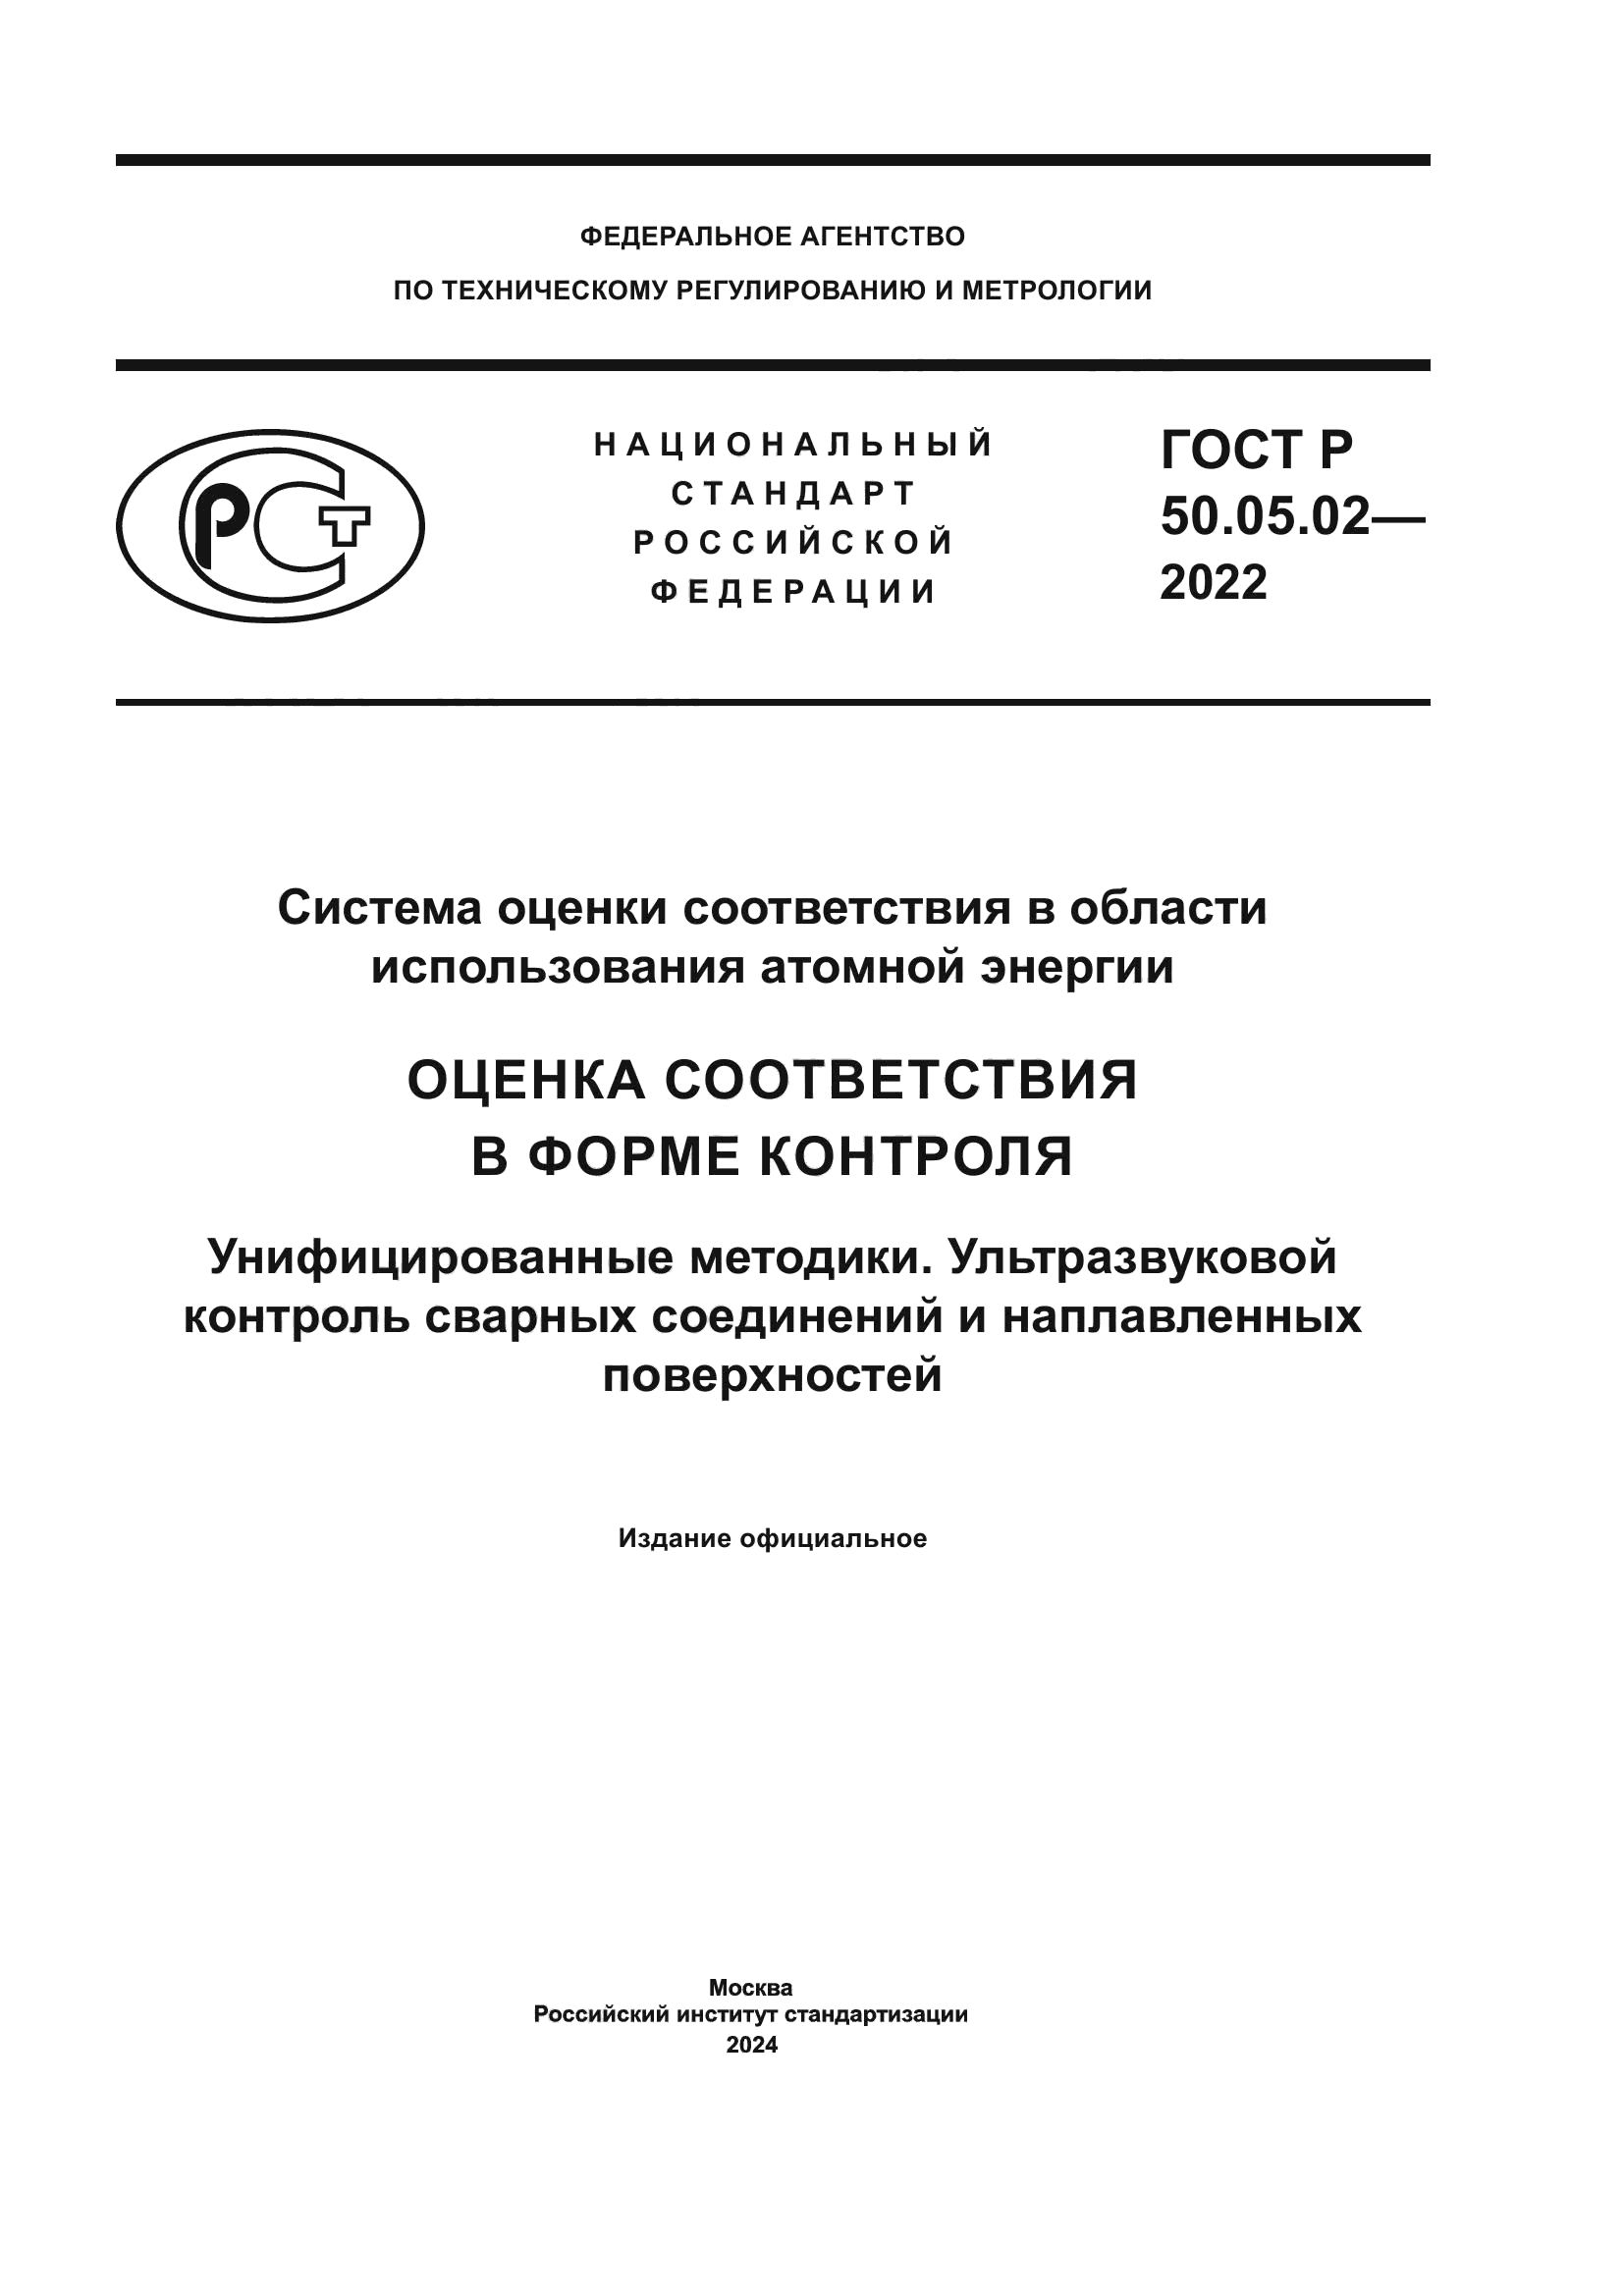 ГОСТ Р 50.05.02-2022